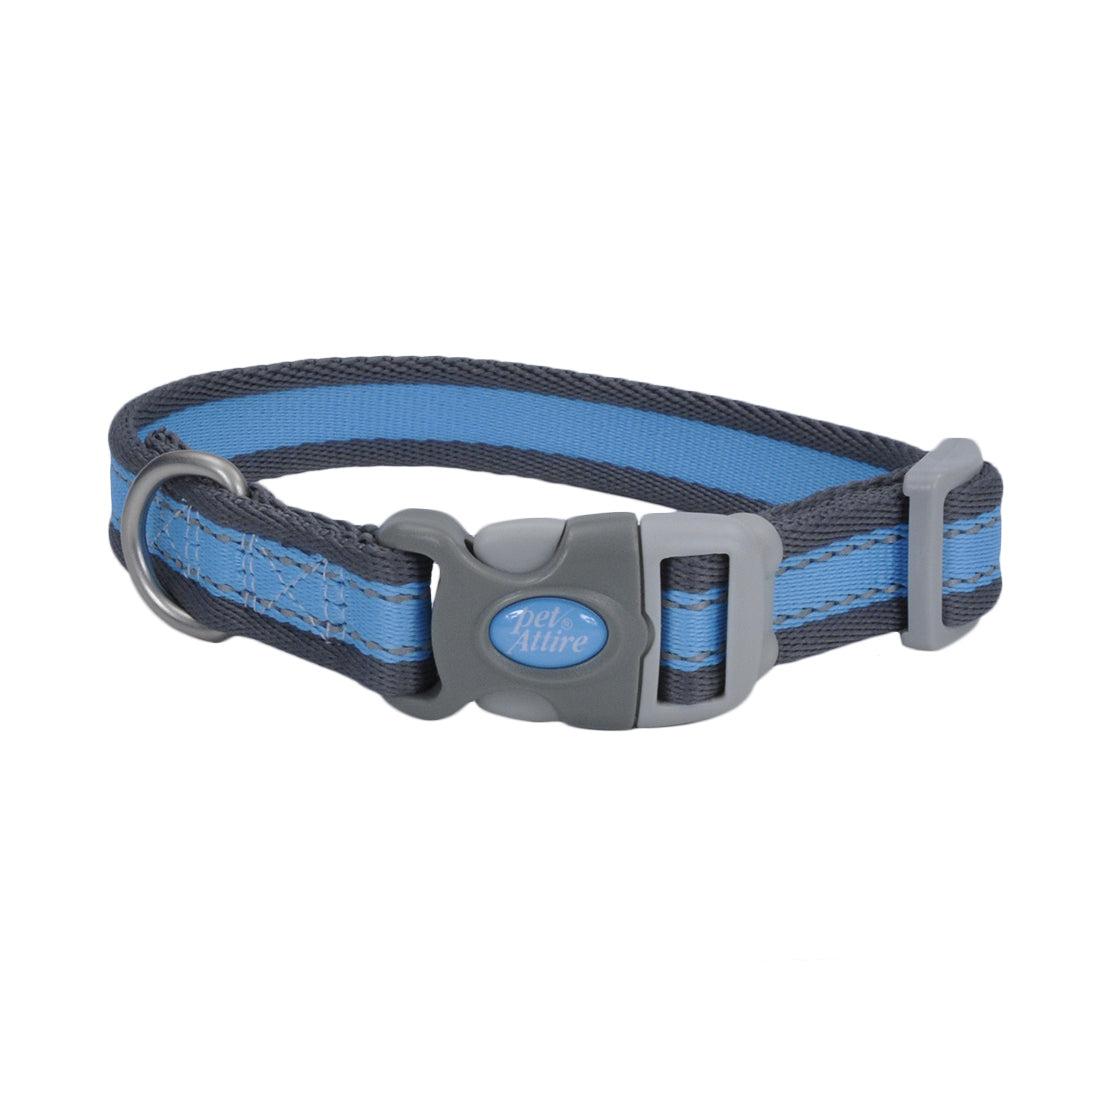 Coastal Pet Attire Pro Adjustable Reflective Collar 10-14" - 3/4" Blue with Gray